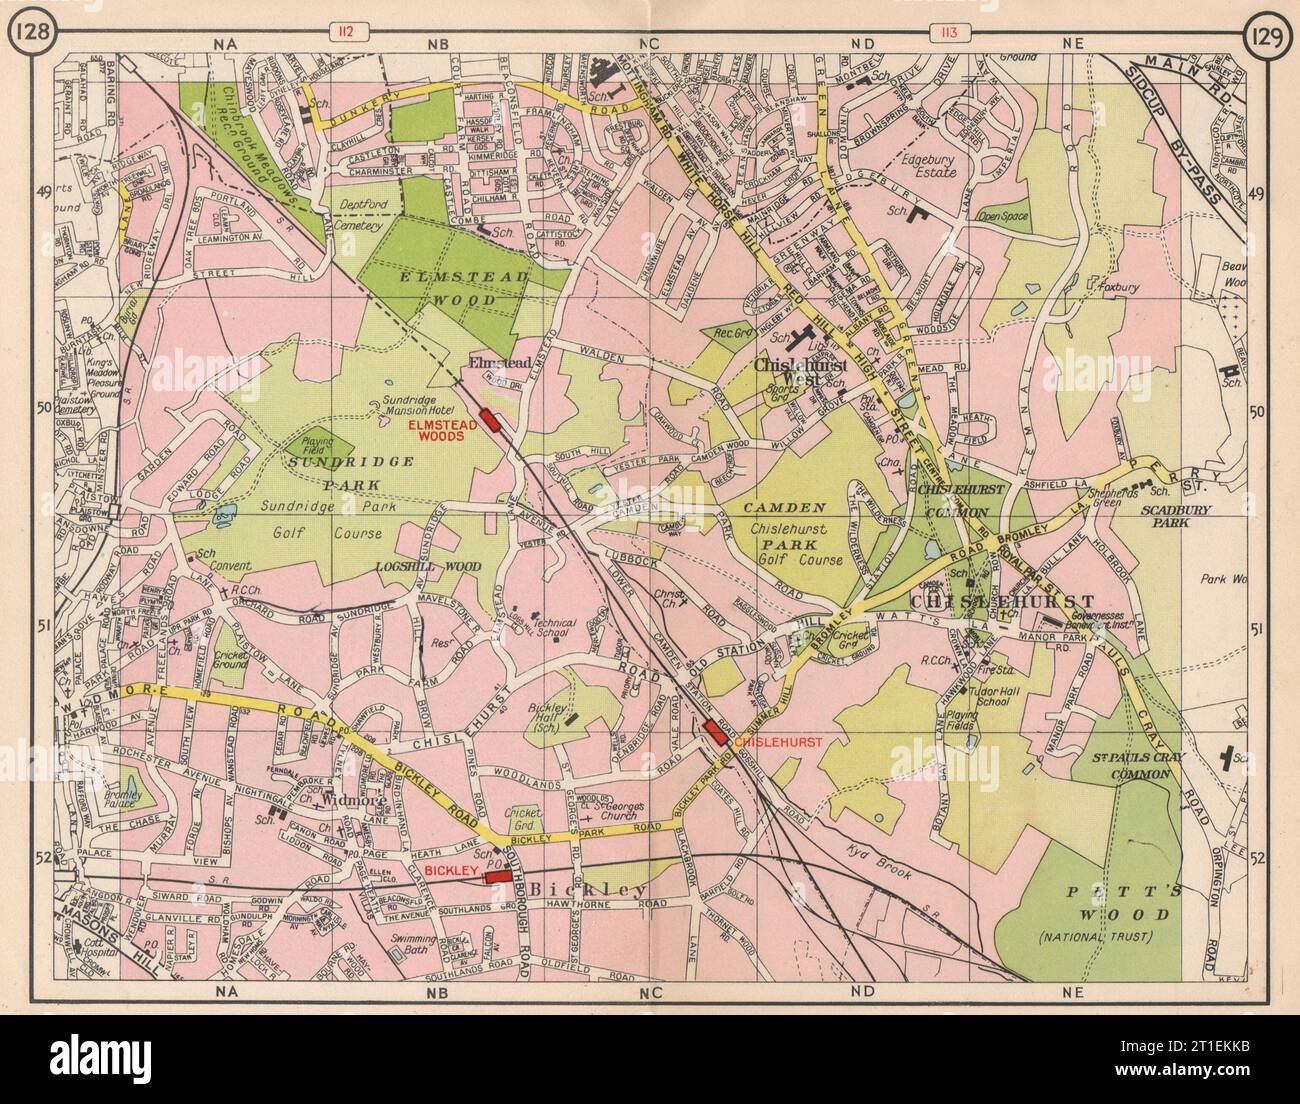 SE LONDON. Chislehurst Widmore Bickley Petts Wood Elmstead Pett's Wood 1953 map Stock Photo